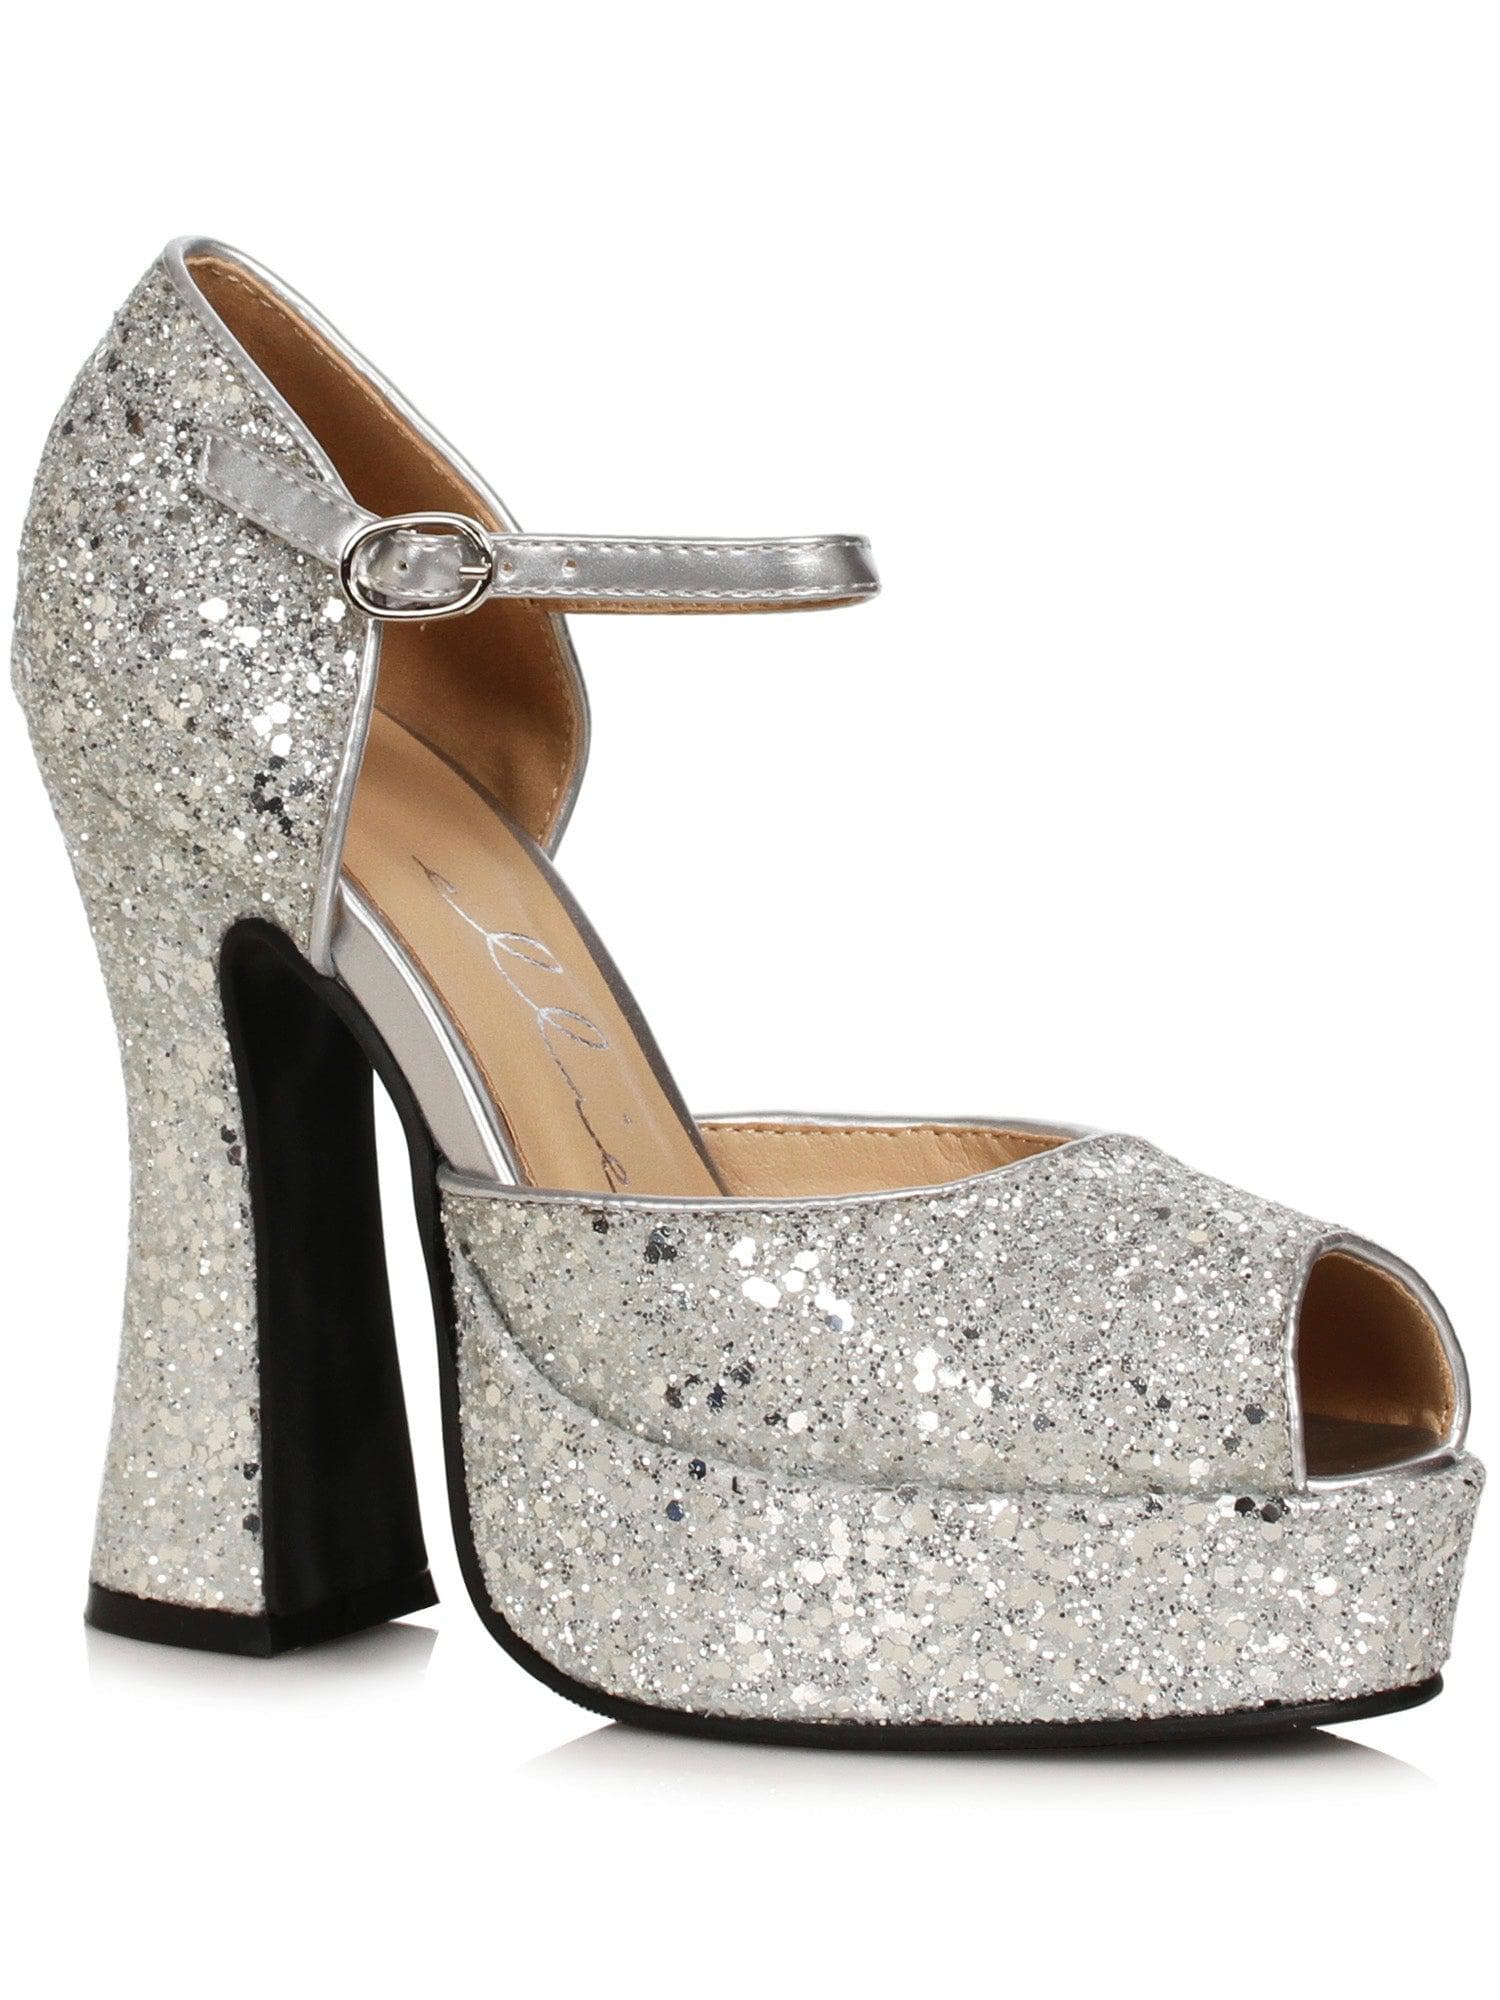 Adult Silver Glitter Open Toe Platform Heeled Shoes - costumes.com